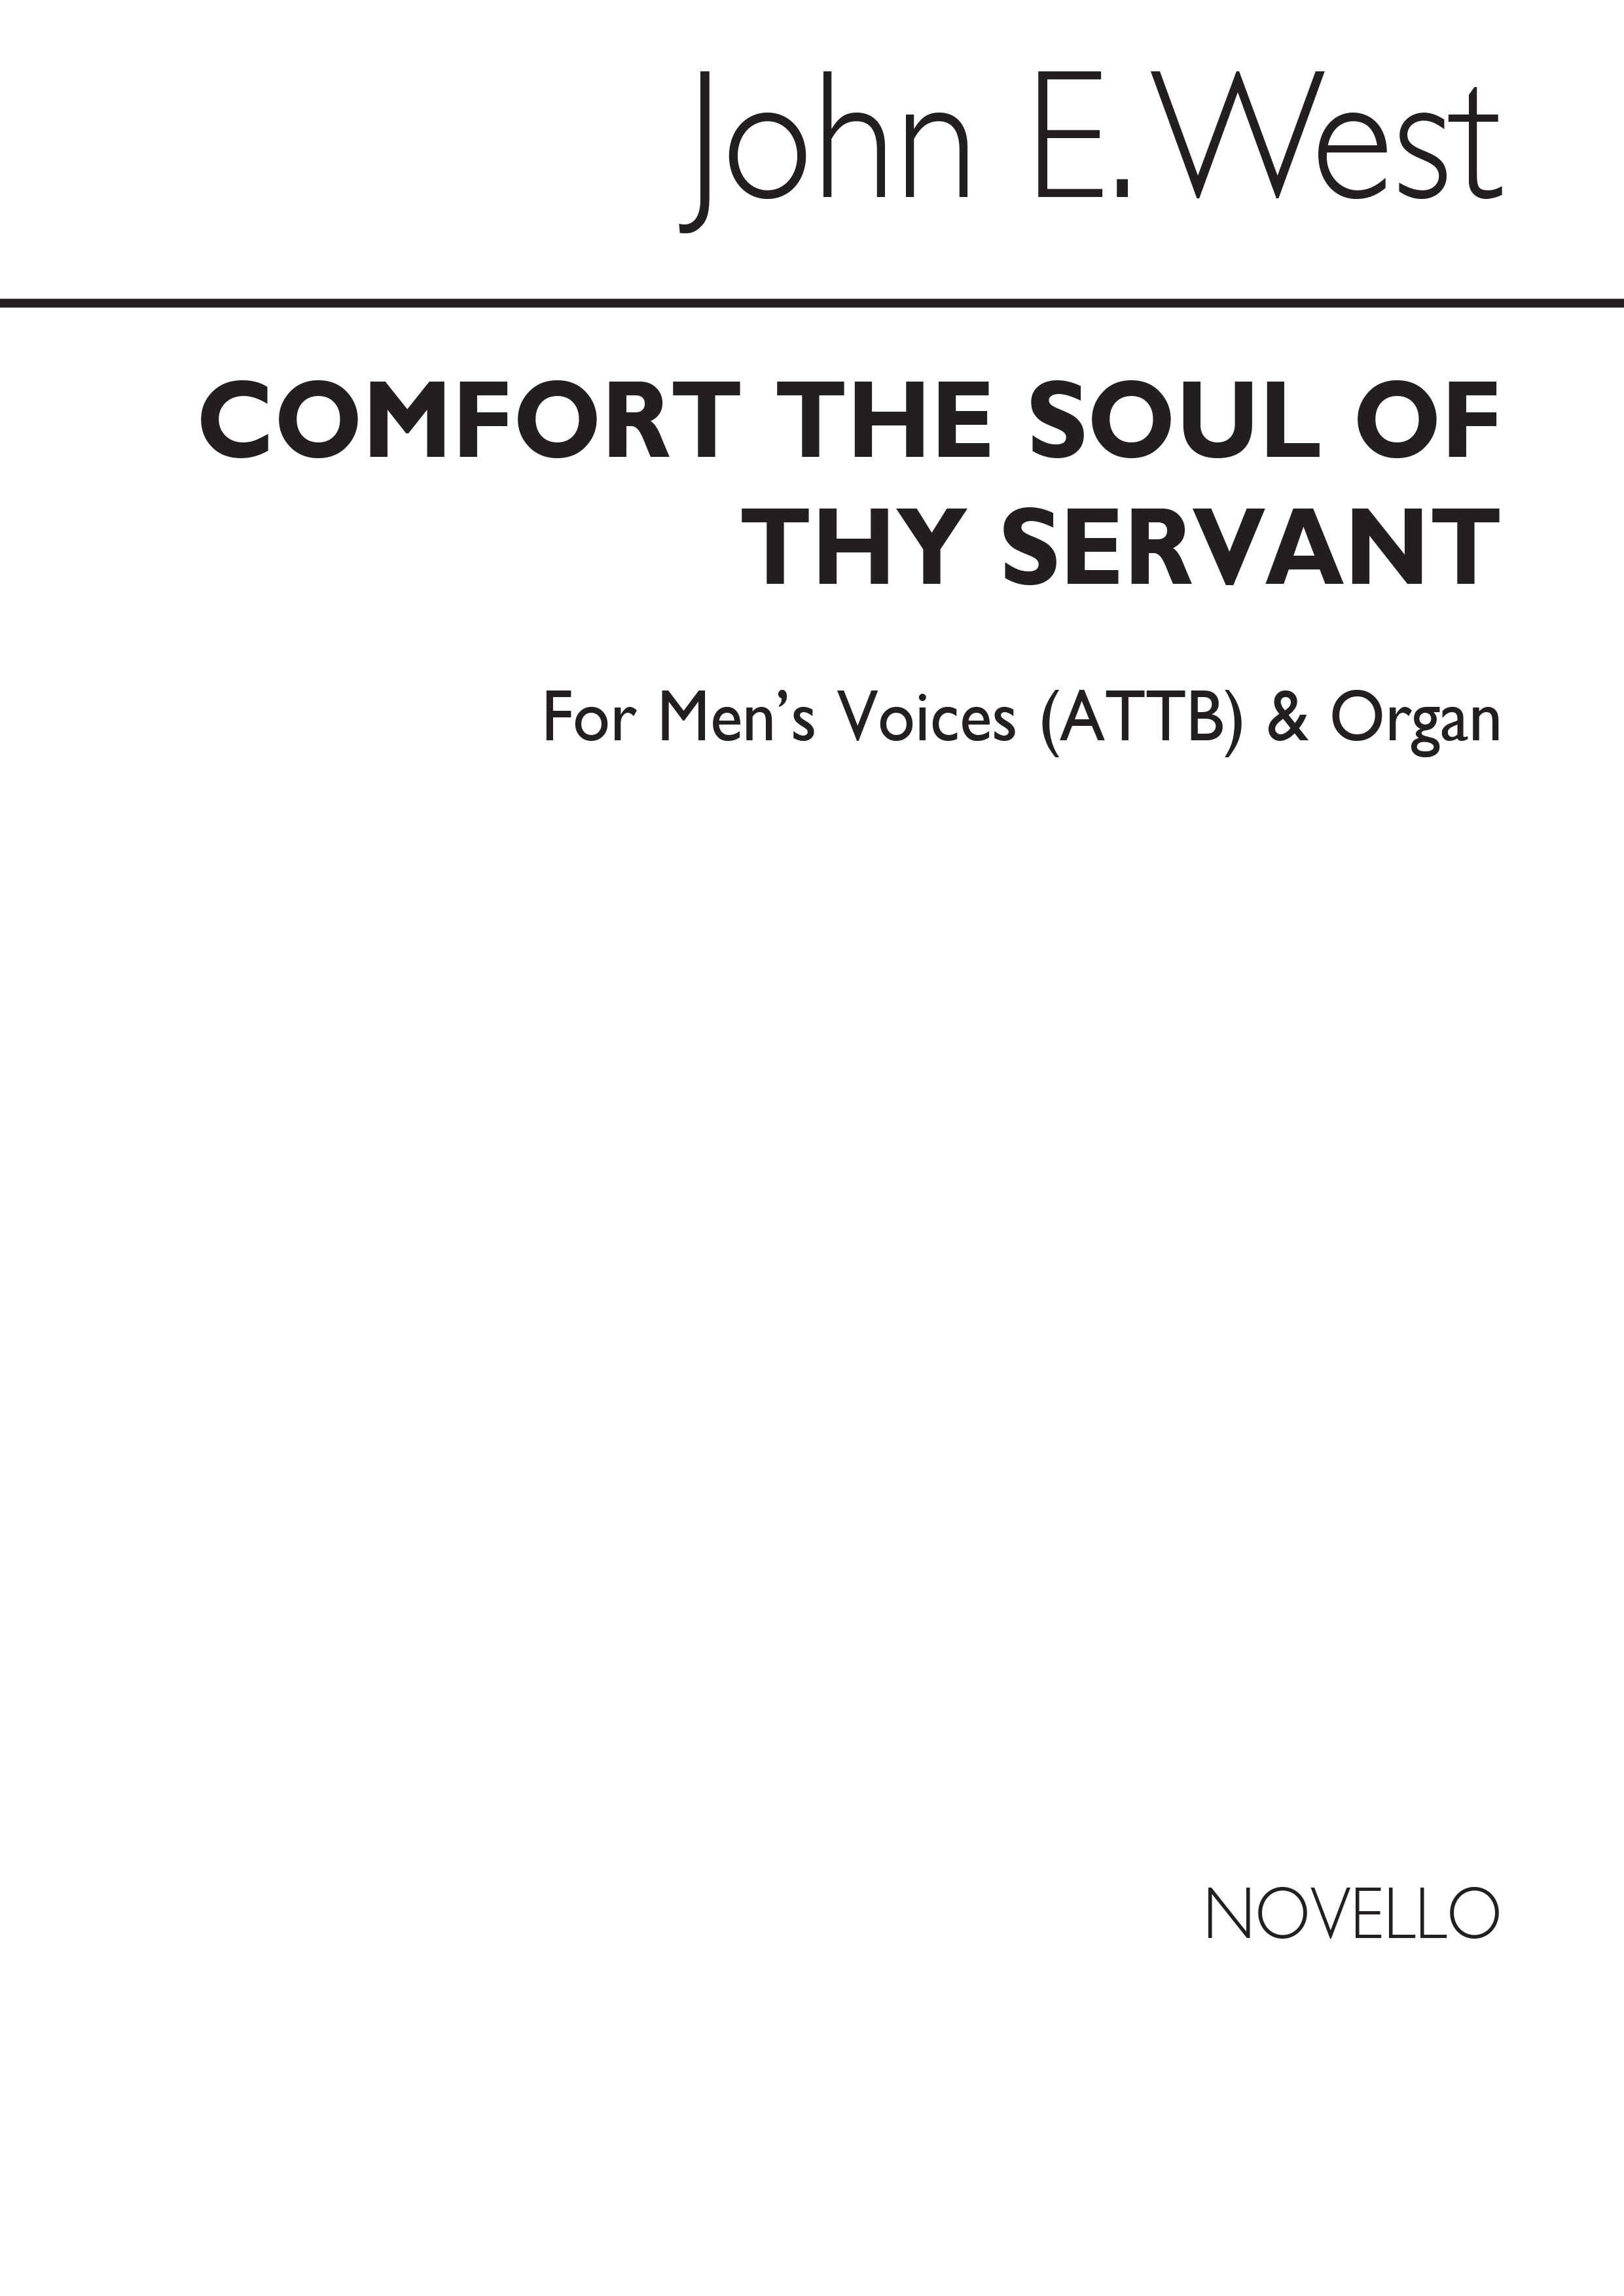 West, J Comfort The Soul Of Thy Servant Attbb/Organ